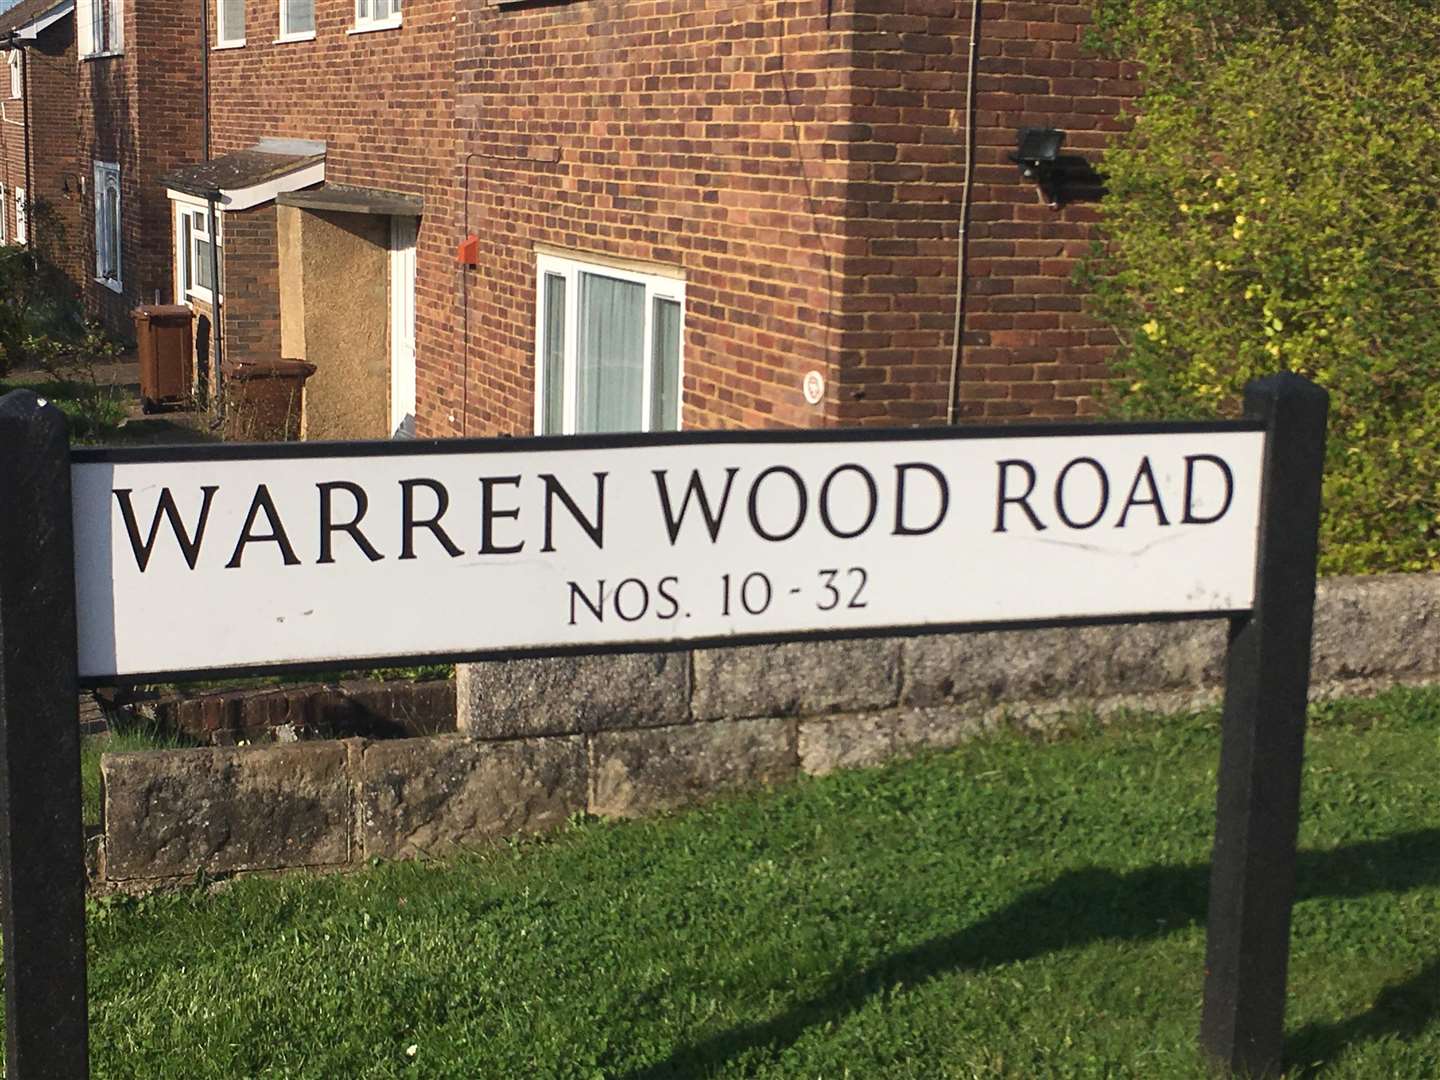 The house has been cordoned off in Warren Wood Road